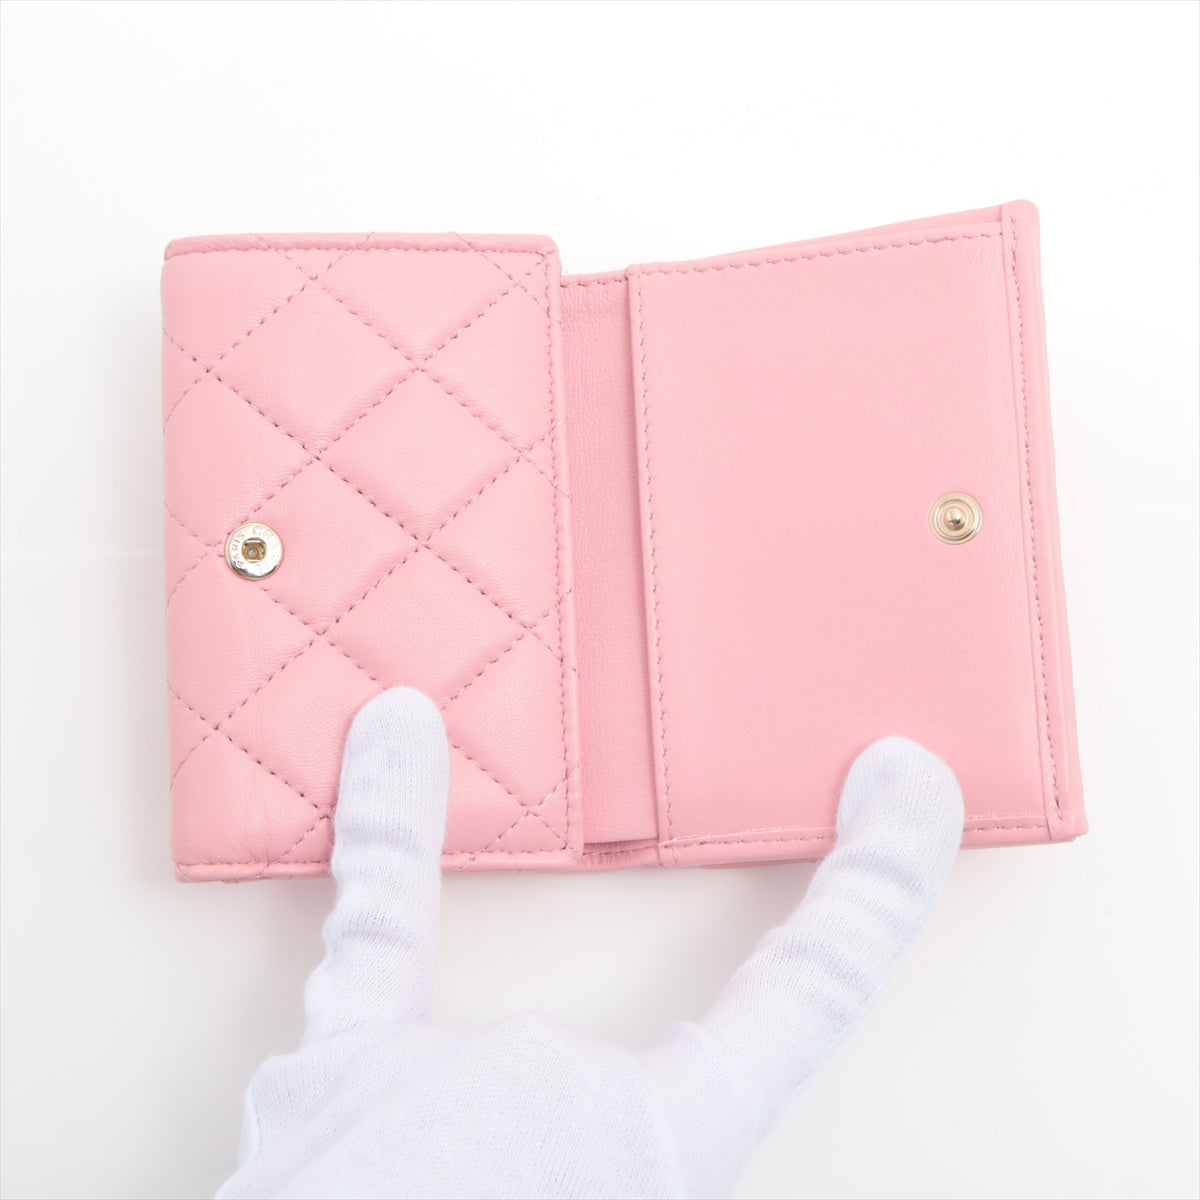 Chanel Matelasse Lambskin Compact Wallet Pink Pink gold hardware random